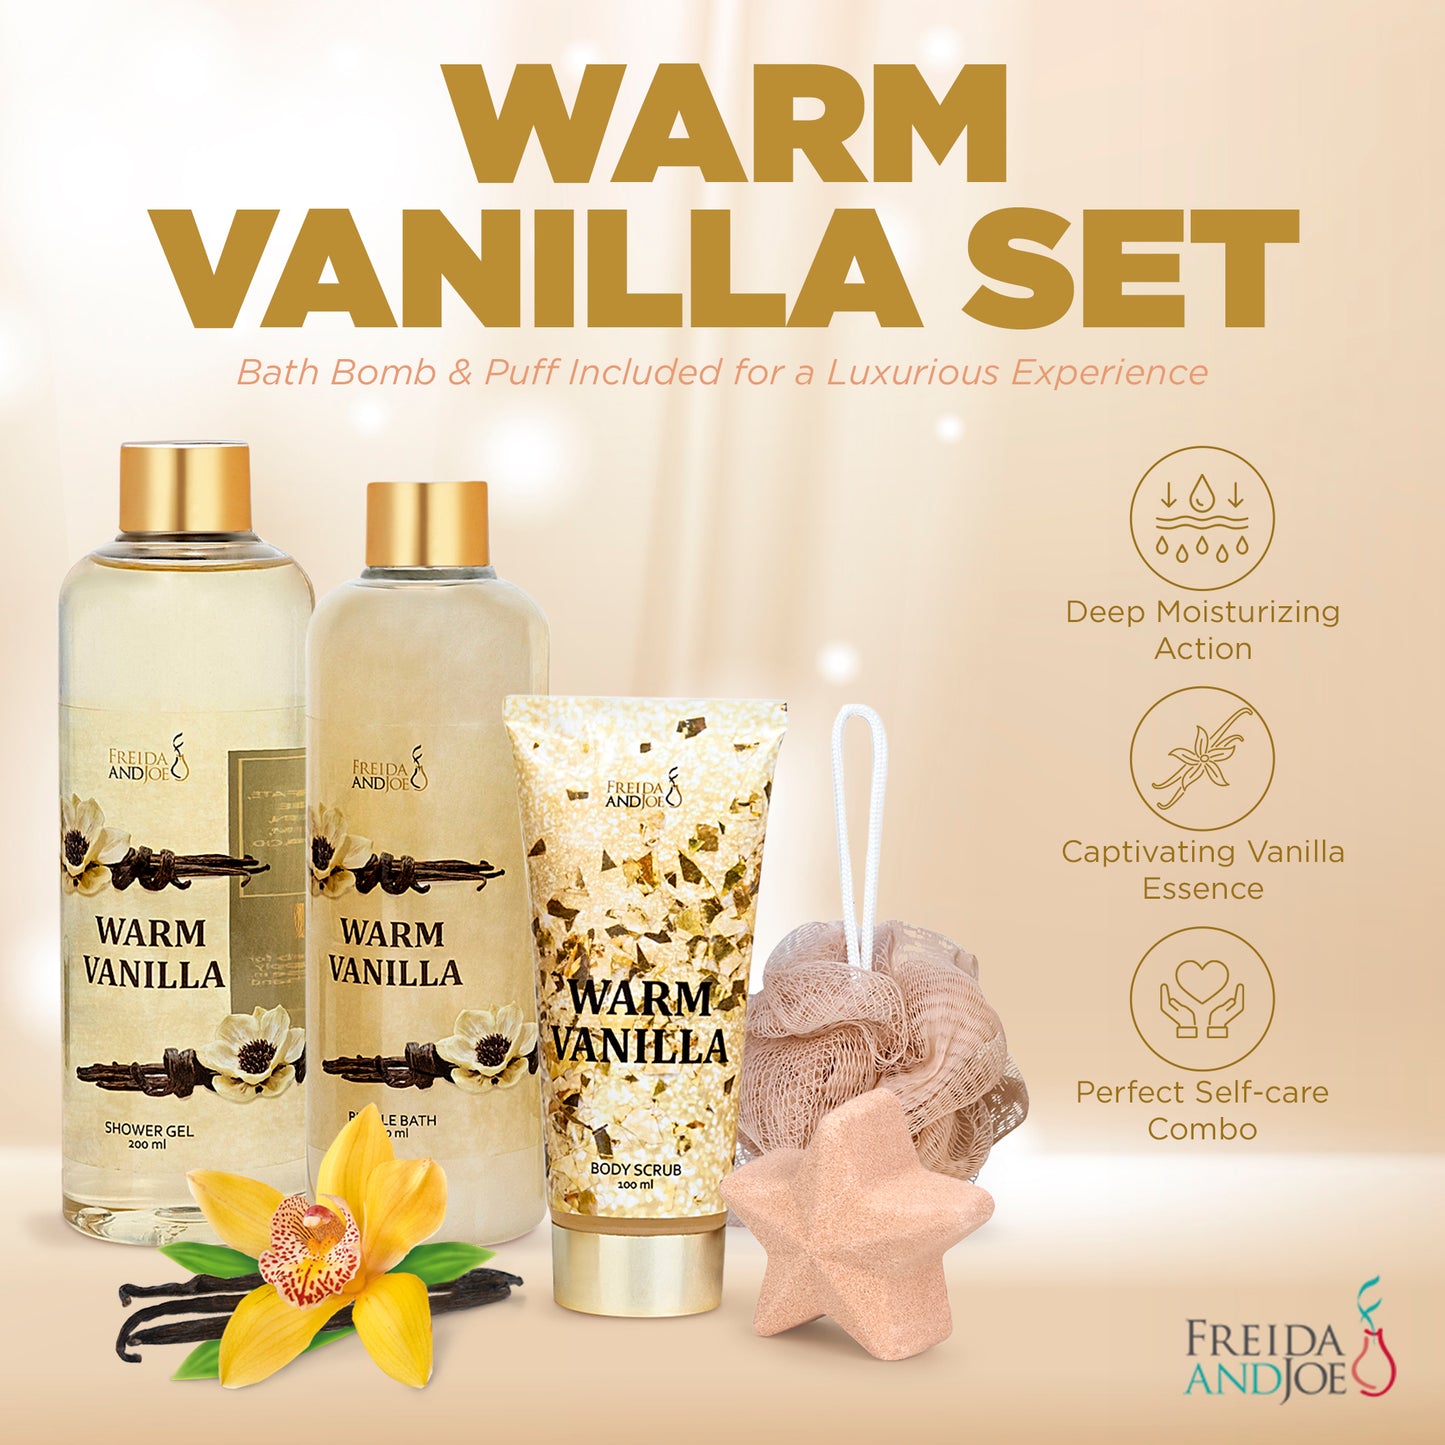 Warm Vanilla Fragrance 5-Piece Bath and Body Gift Box